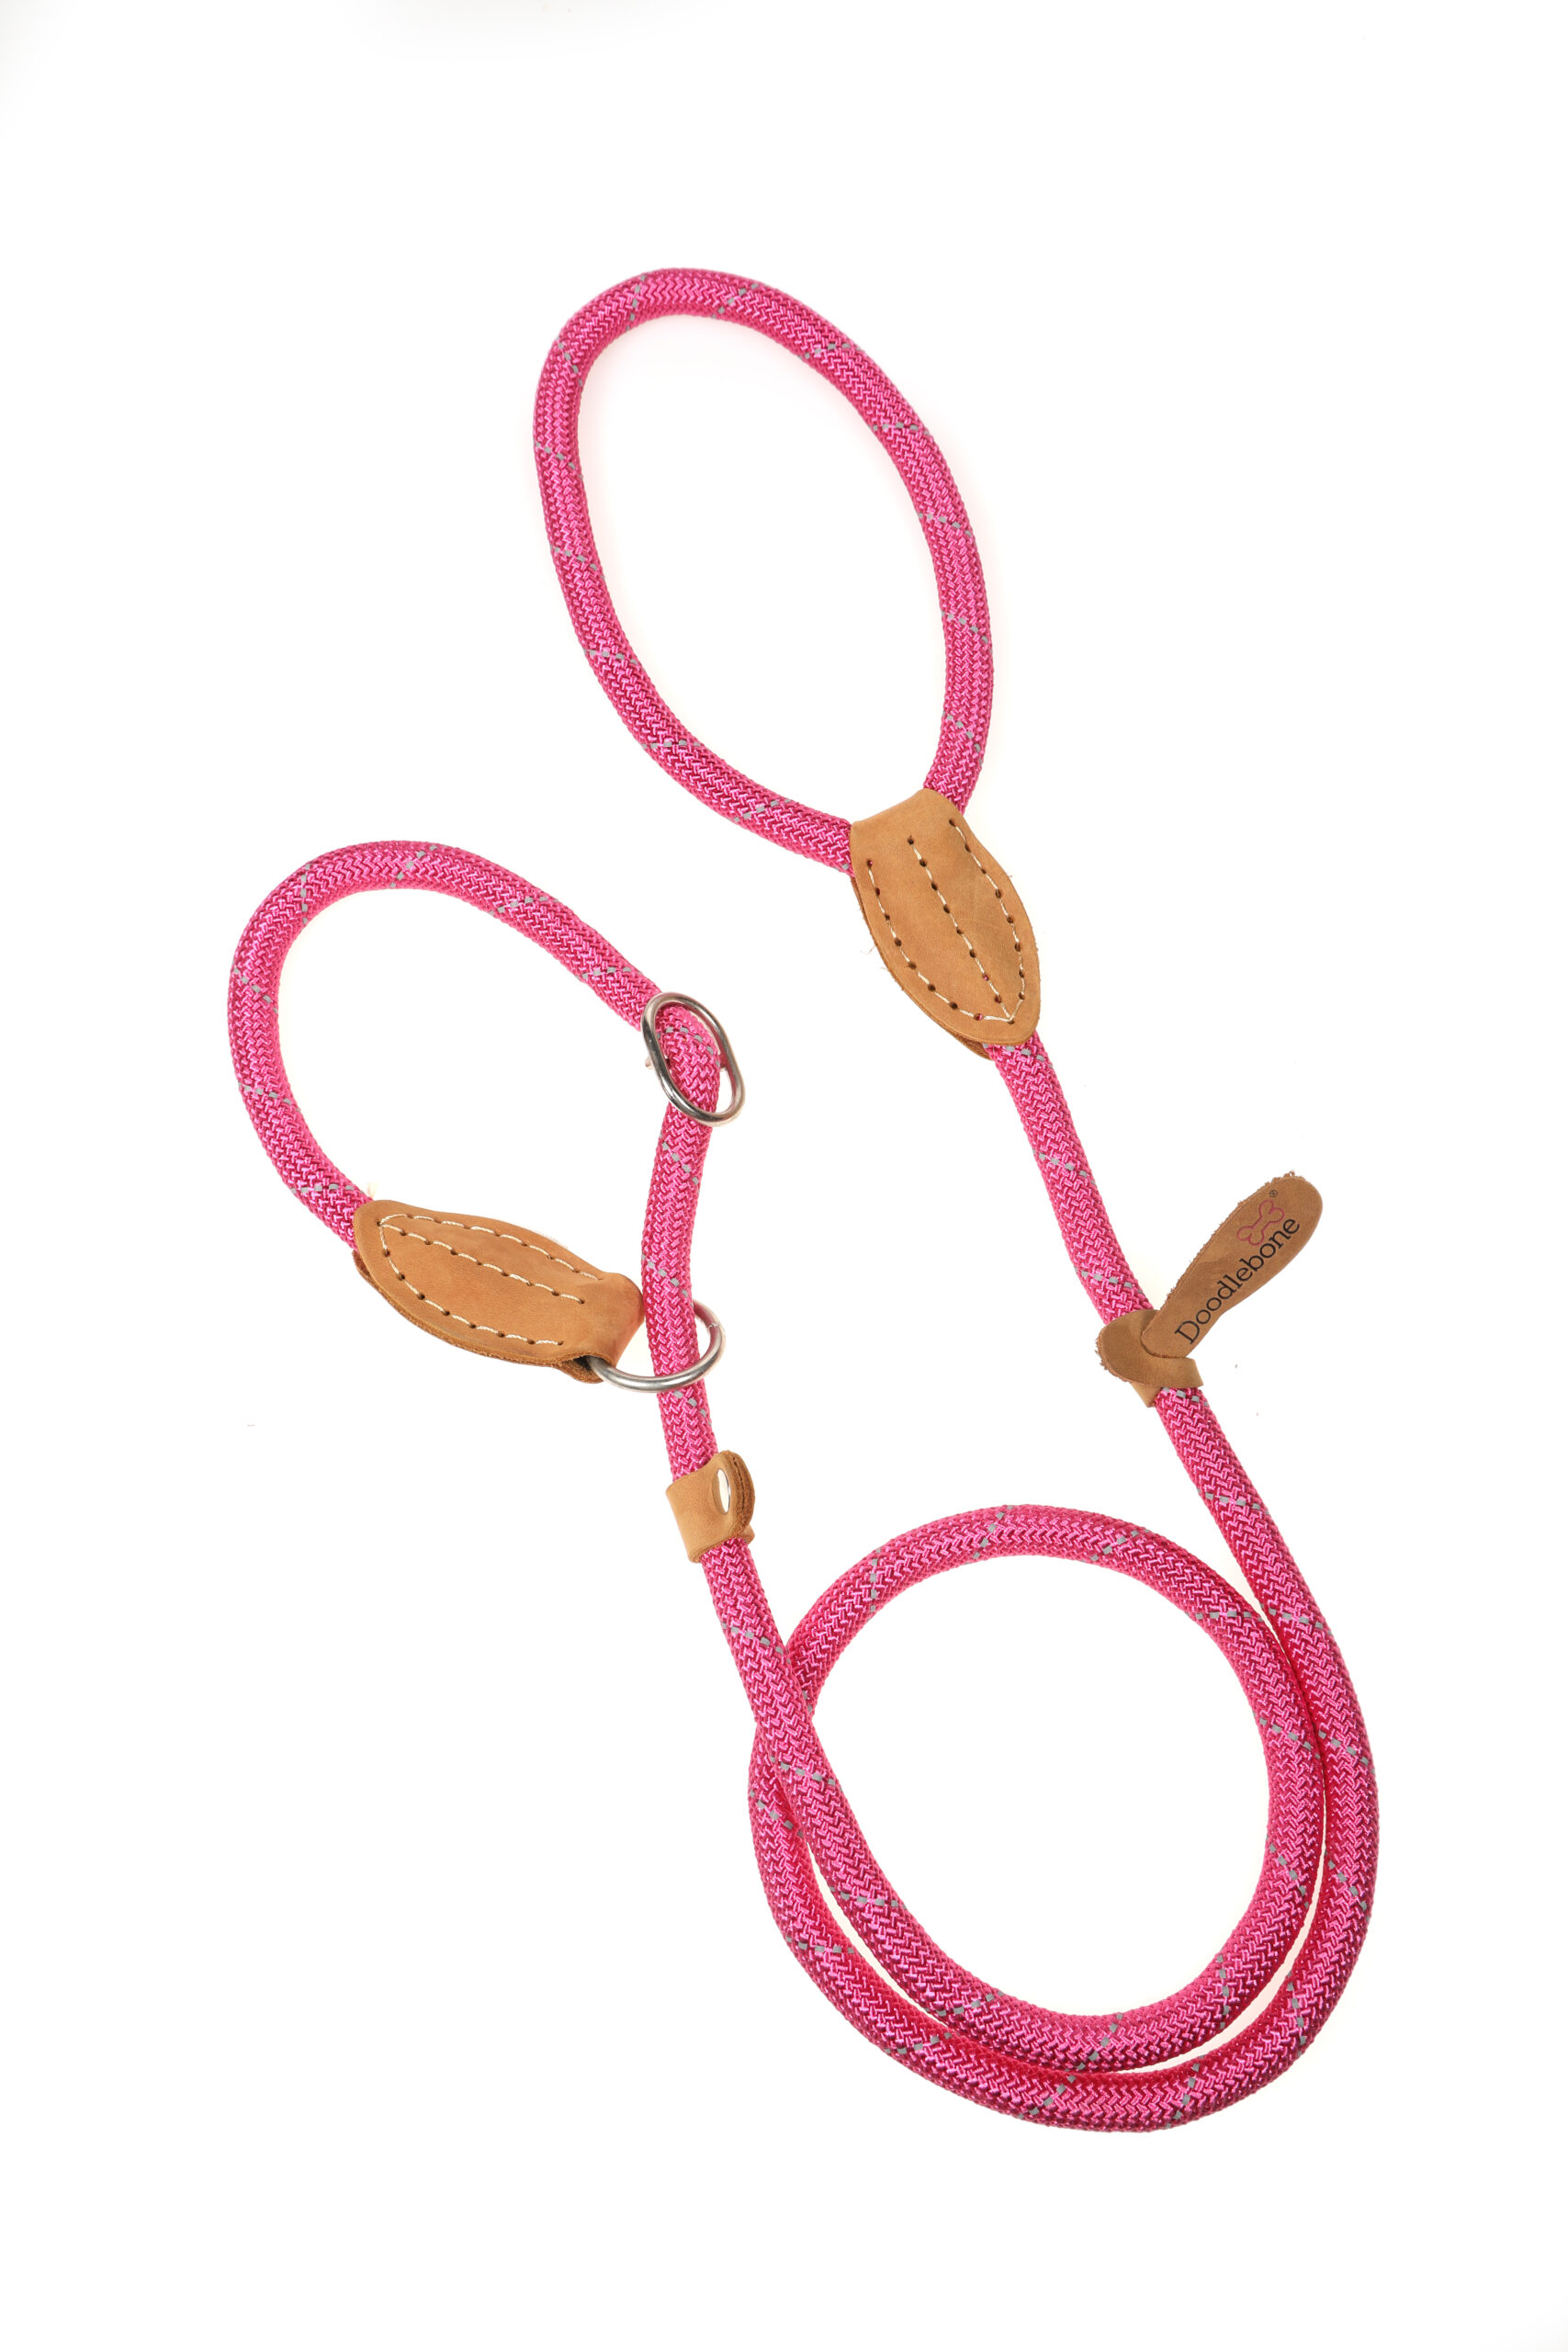 Doodlebone Originals Bright Pink Rope Dog Slip Lead